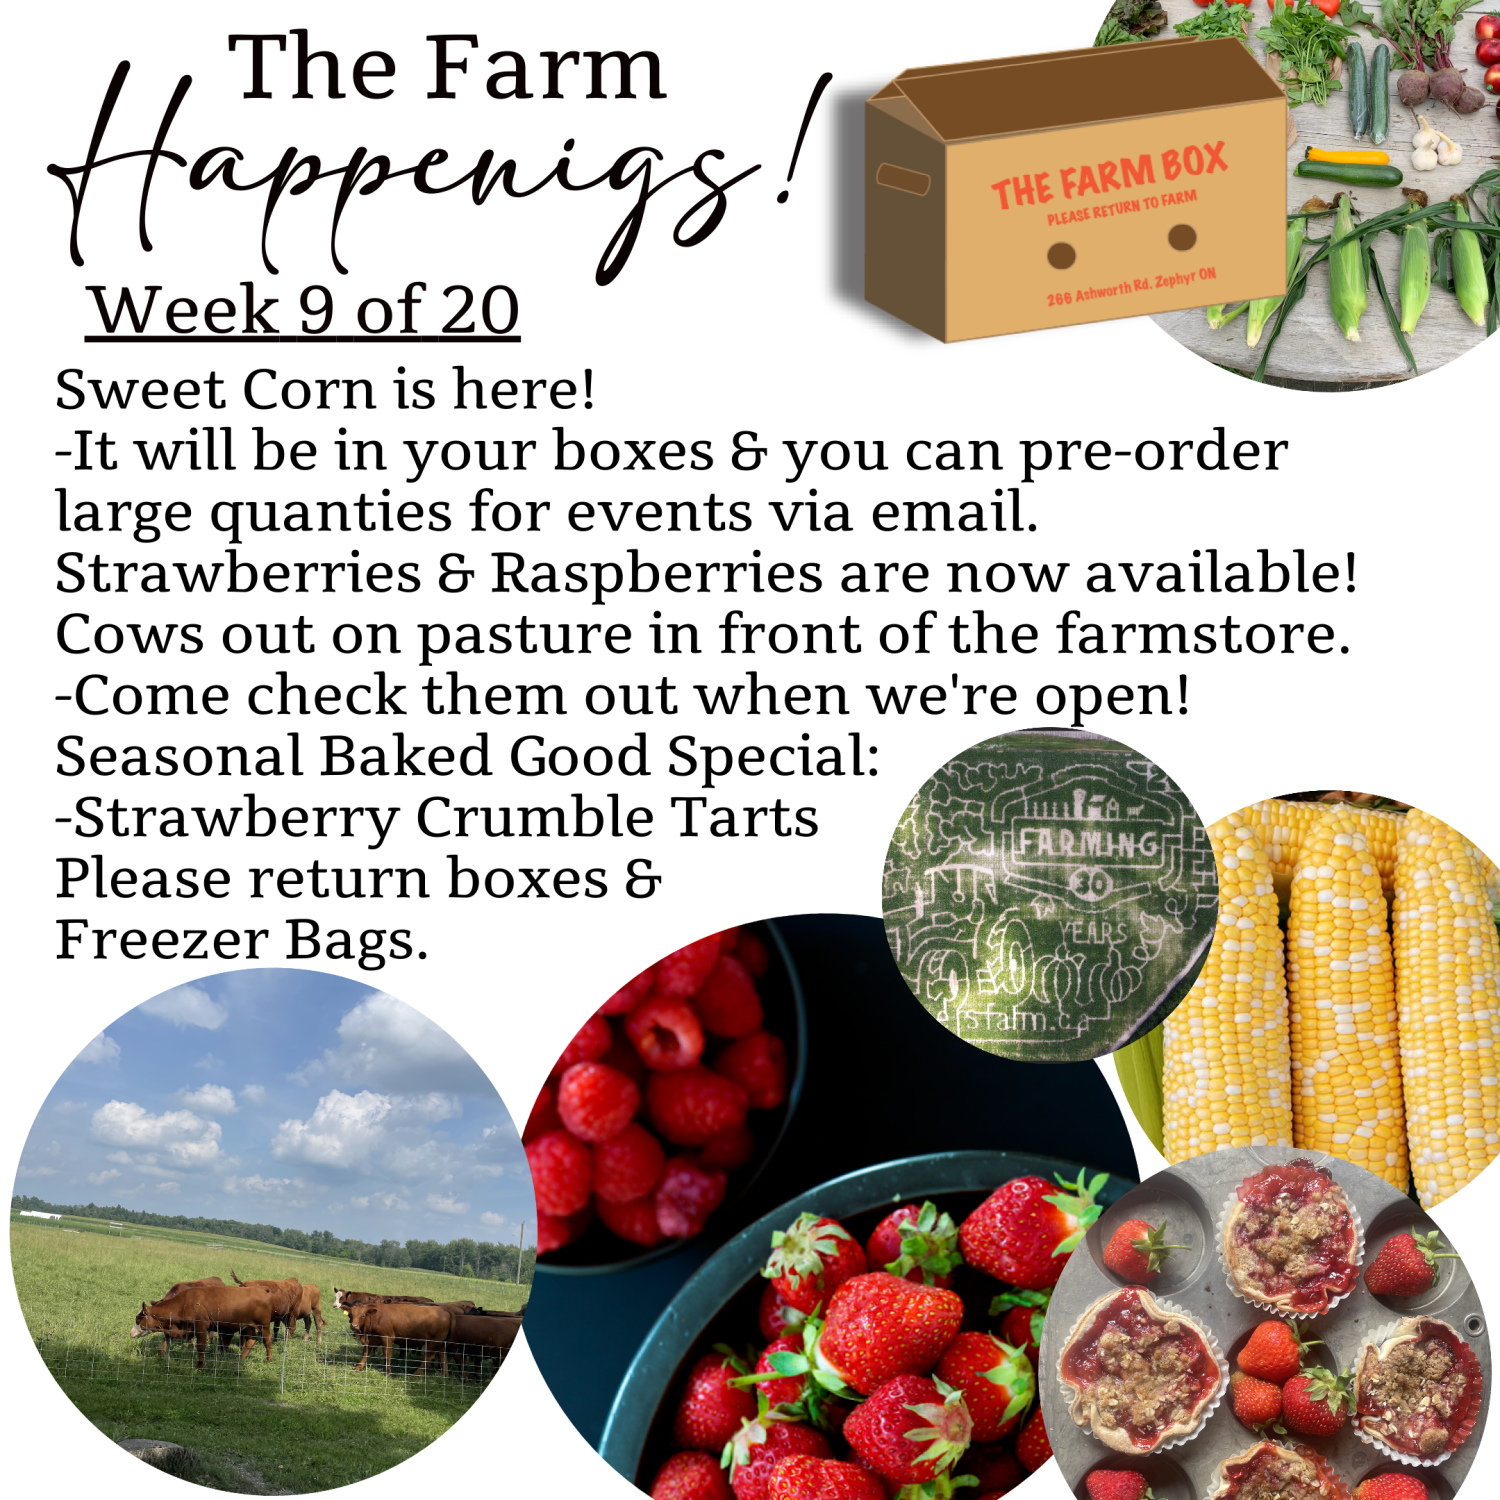 Previous Happening: "The Farm Box"-Coopers CSA Farm Farm Happenings Week 9